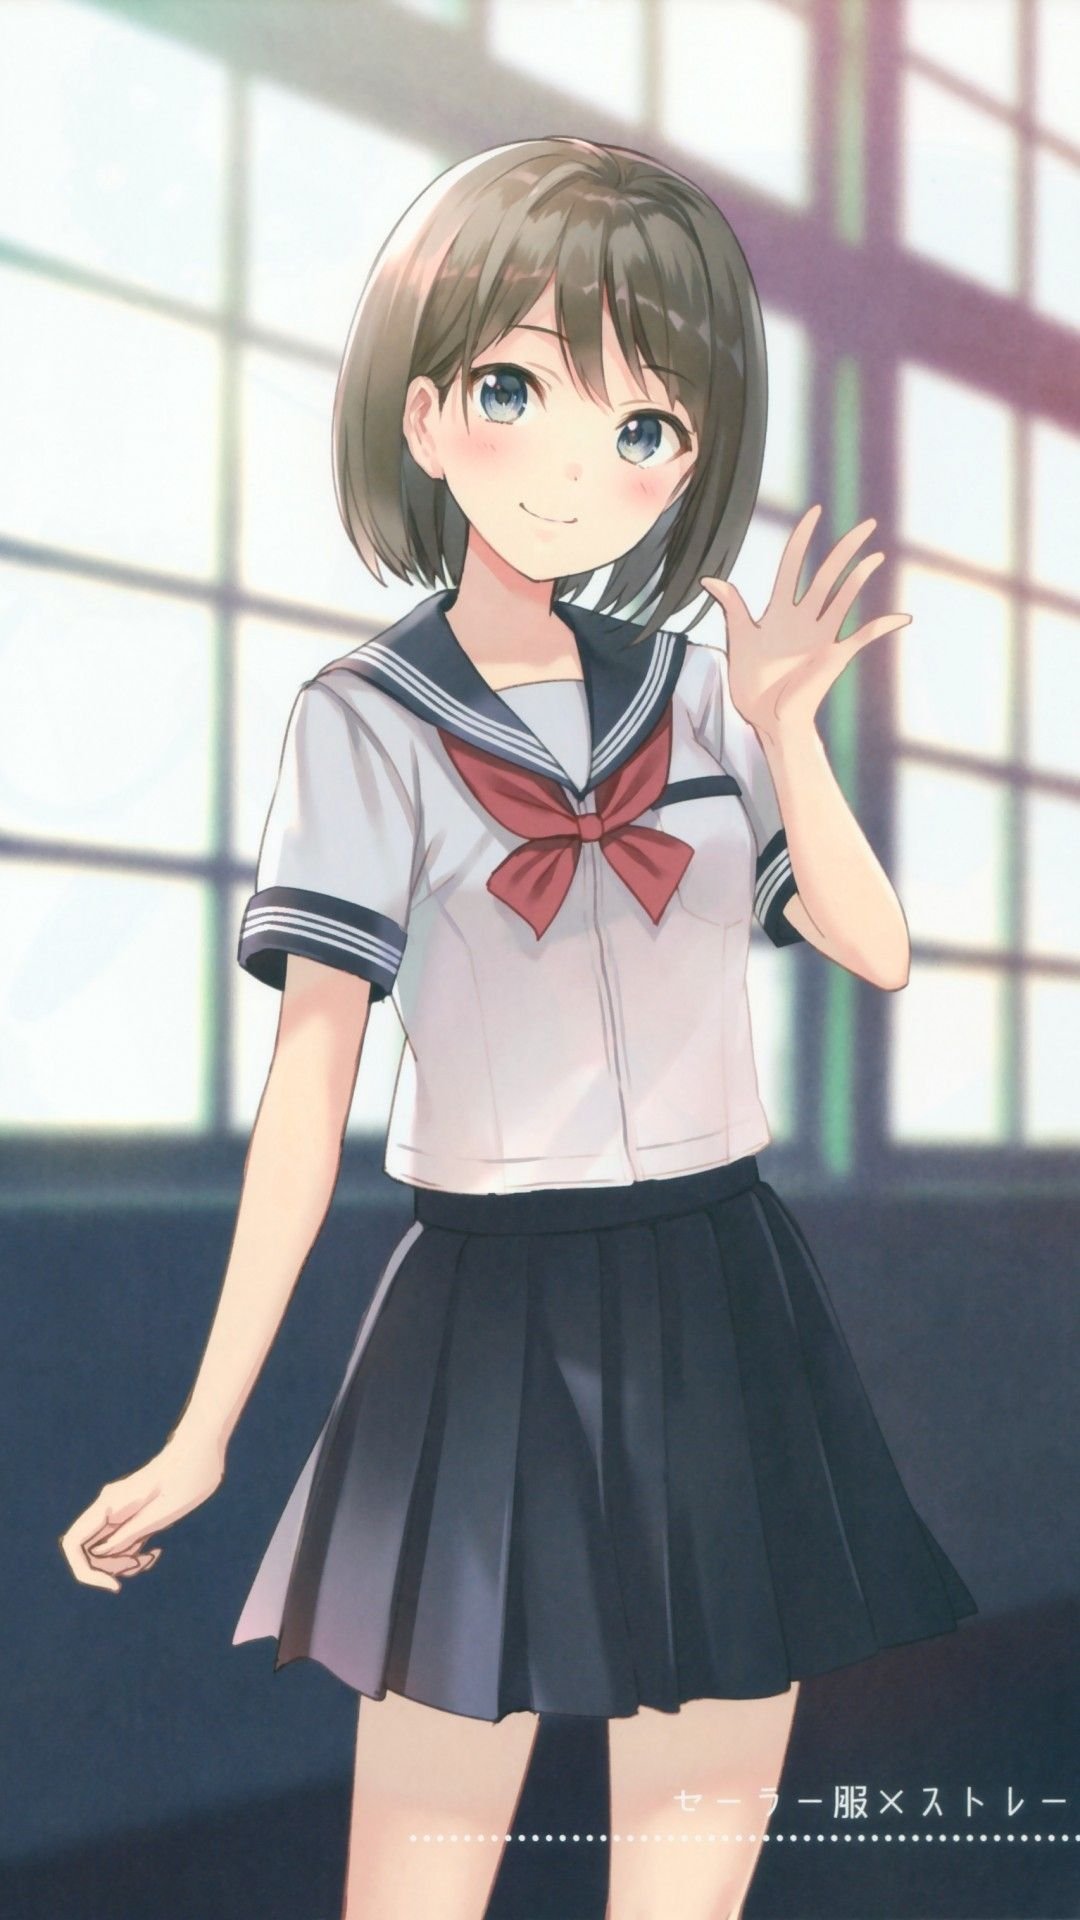 Anime School Girl Wallpaper Download | MobCup